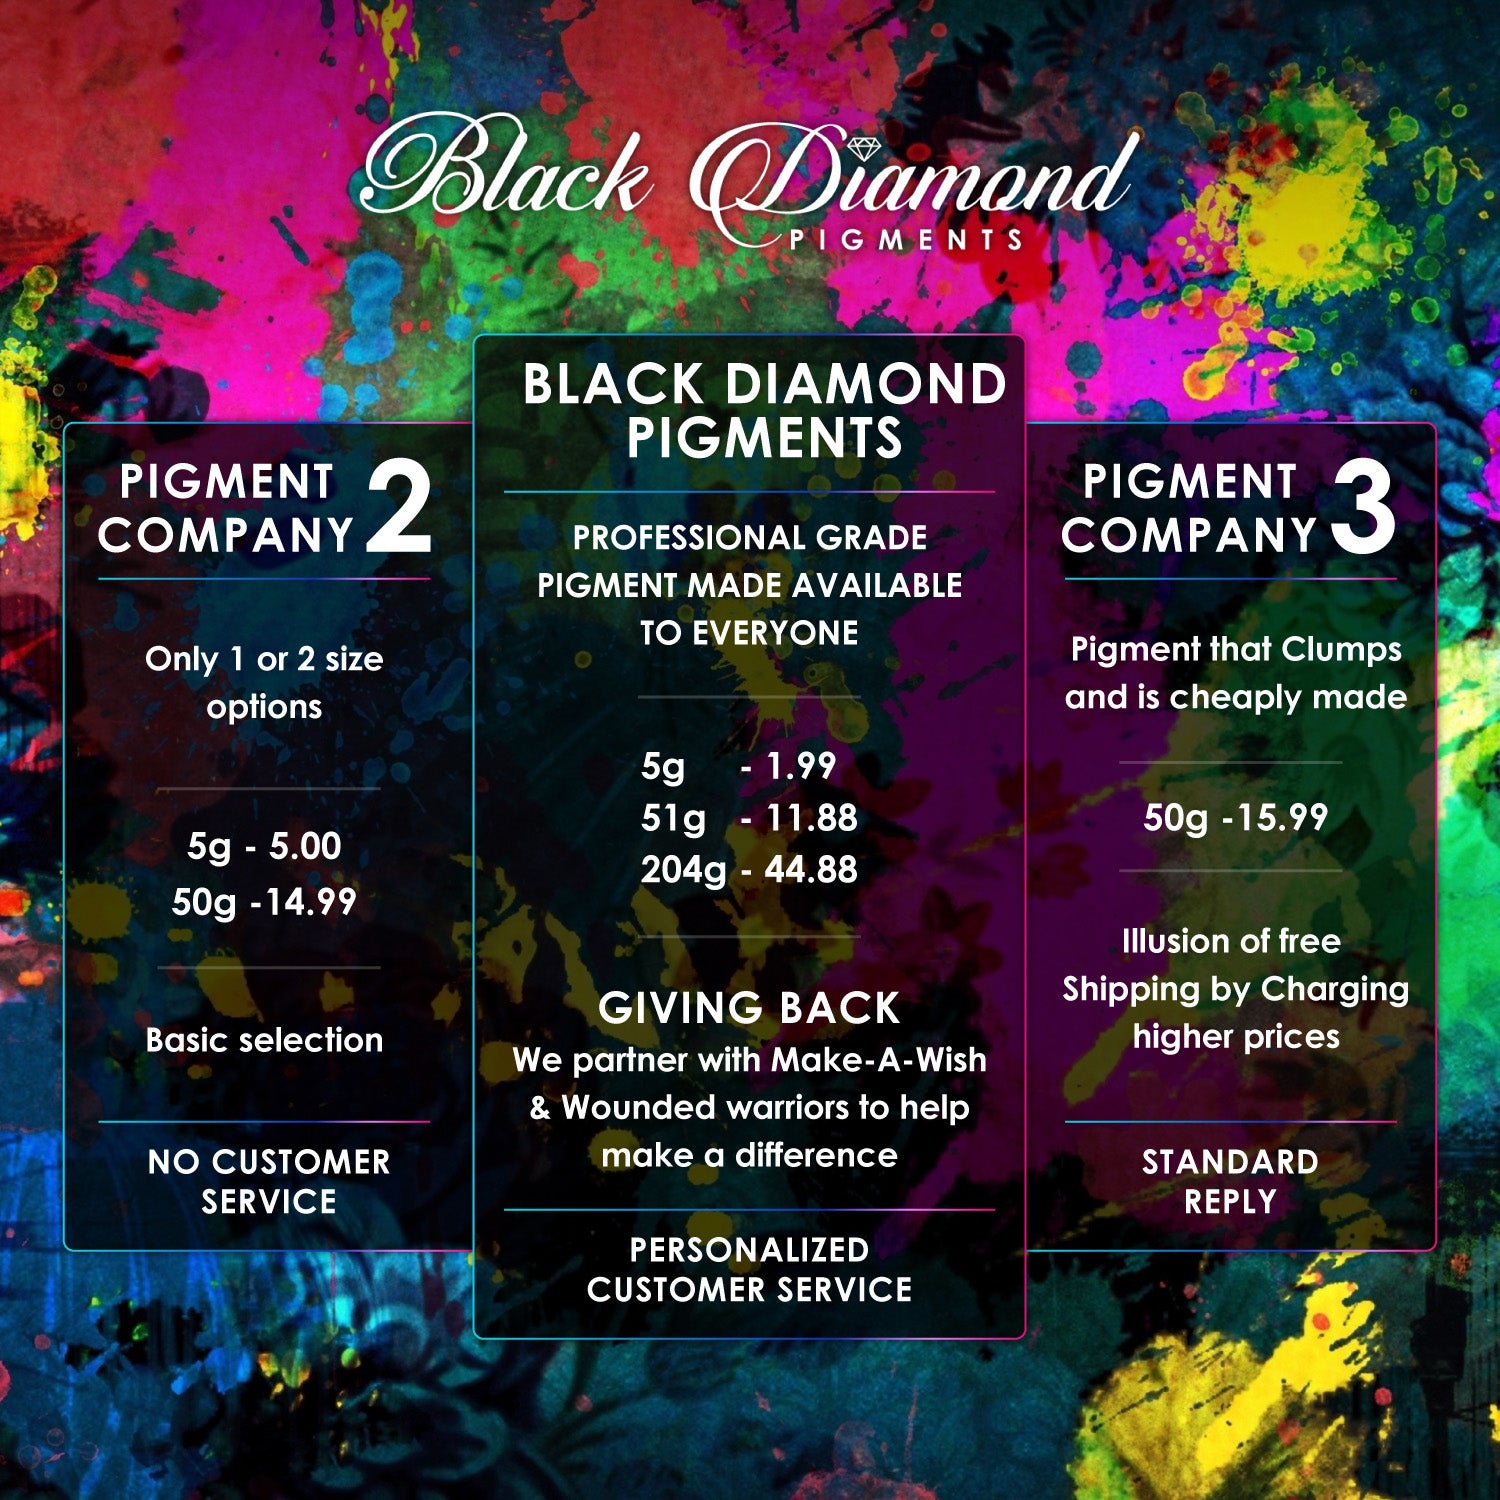 "PIGMENT BOX 2" Black Diamond Pigments